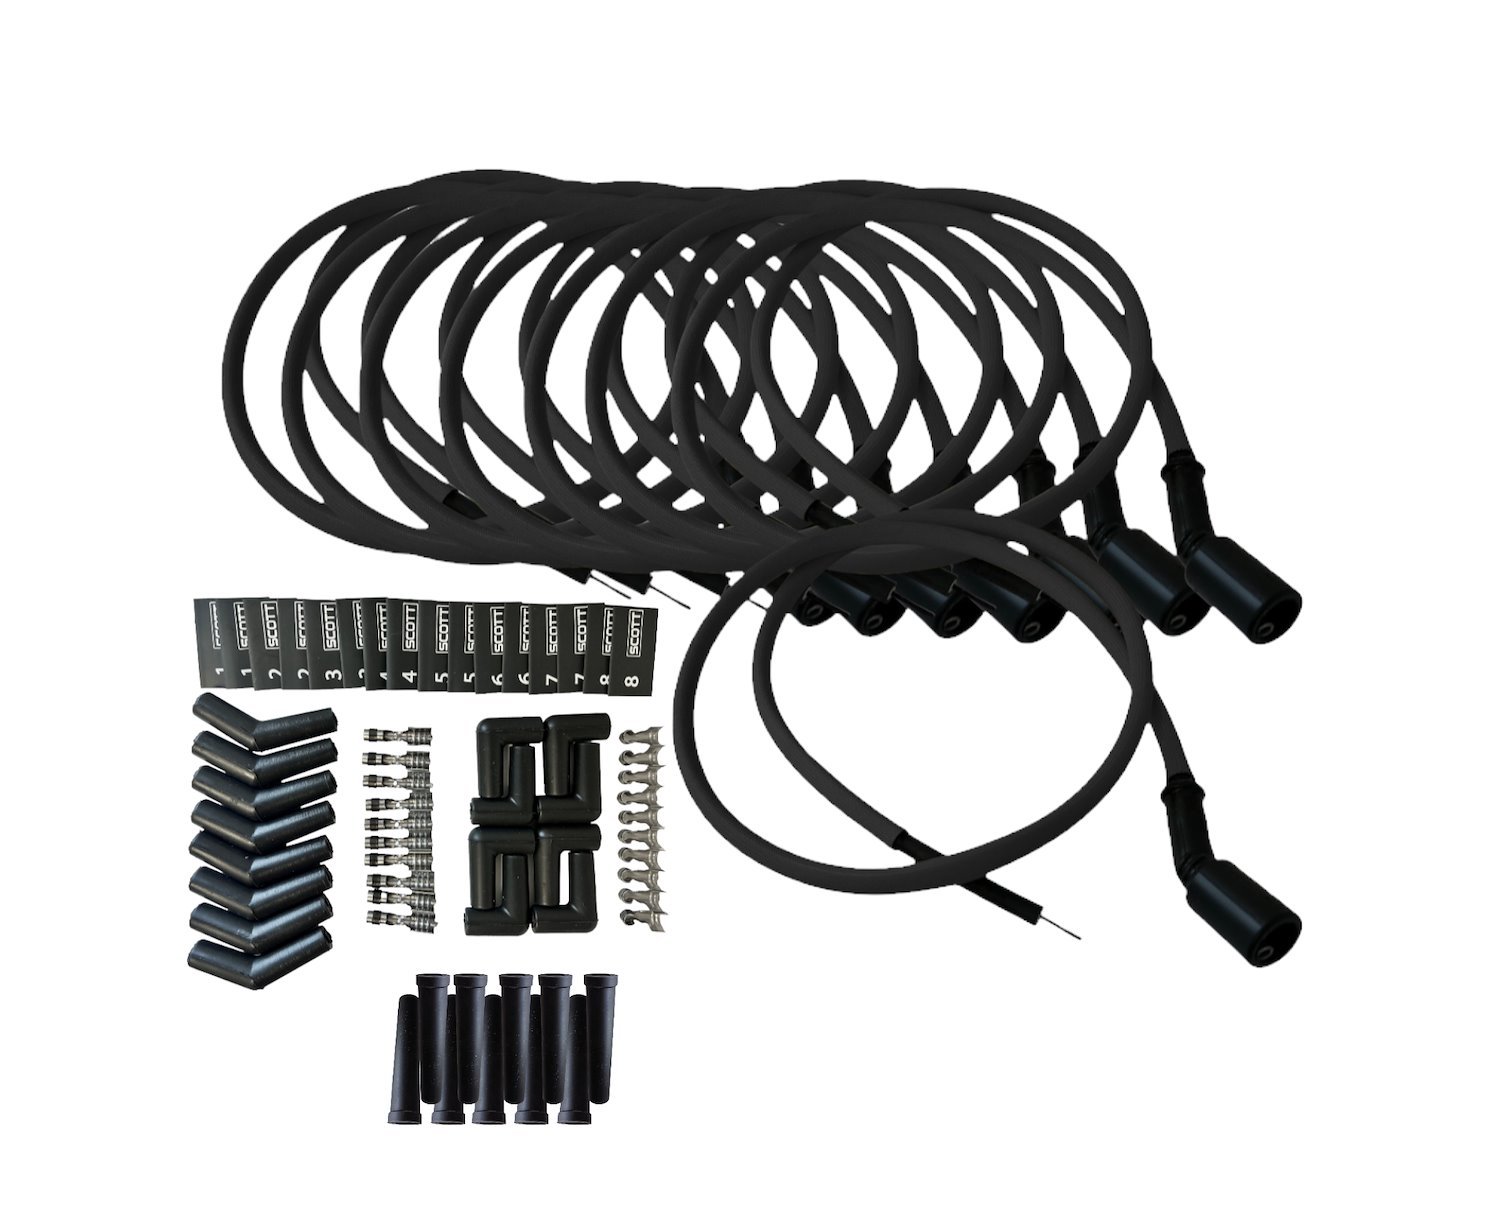 SPW-PS-LSRELO-1 DIY High-Performance Fiberglass-Oversleeved Spark Plug Wire Set for DIY Kits, GM LS [Black]